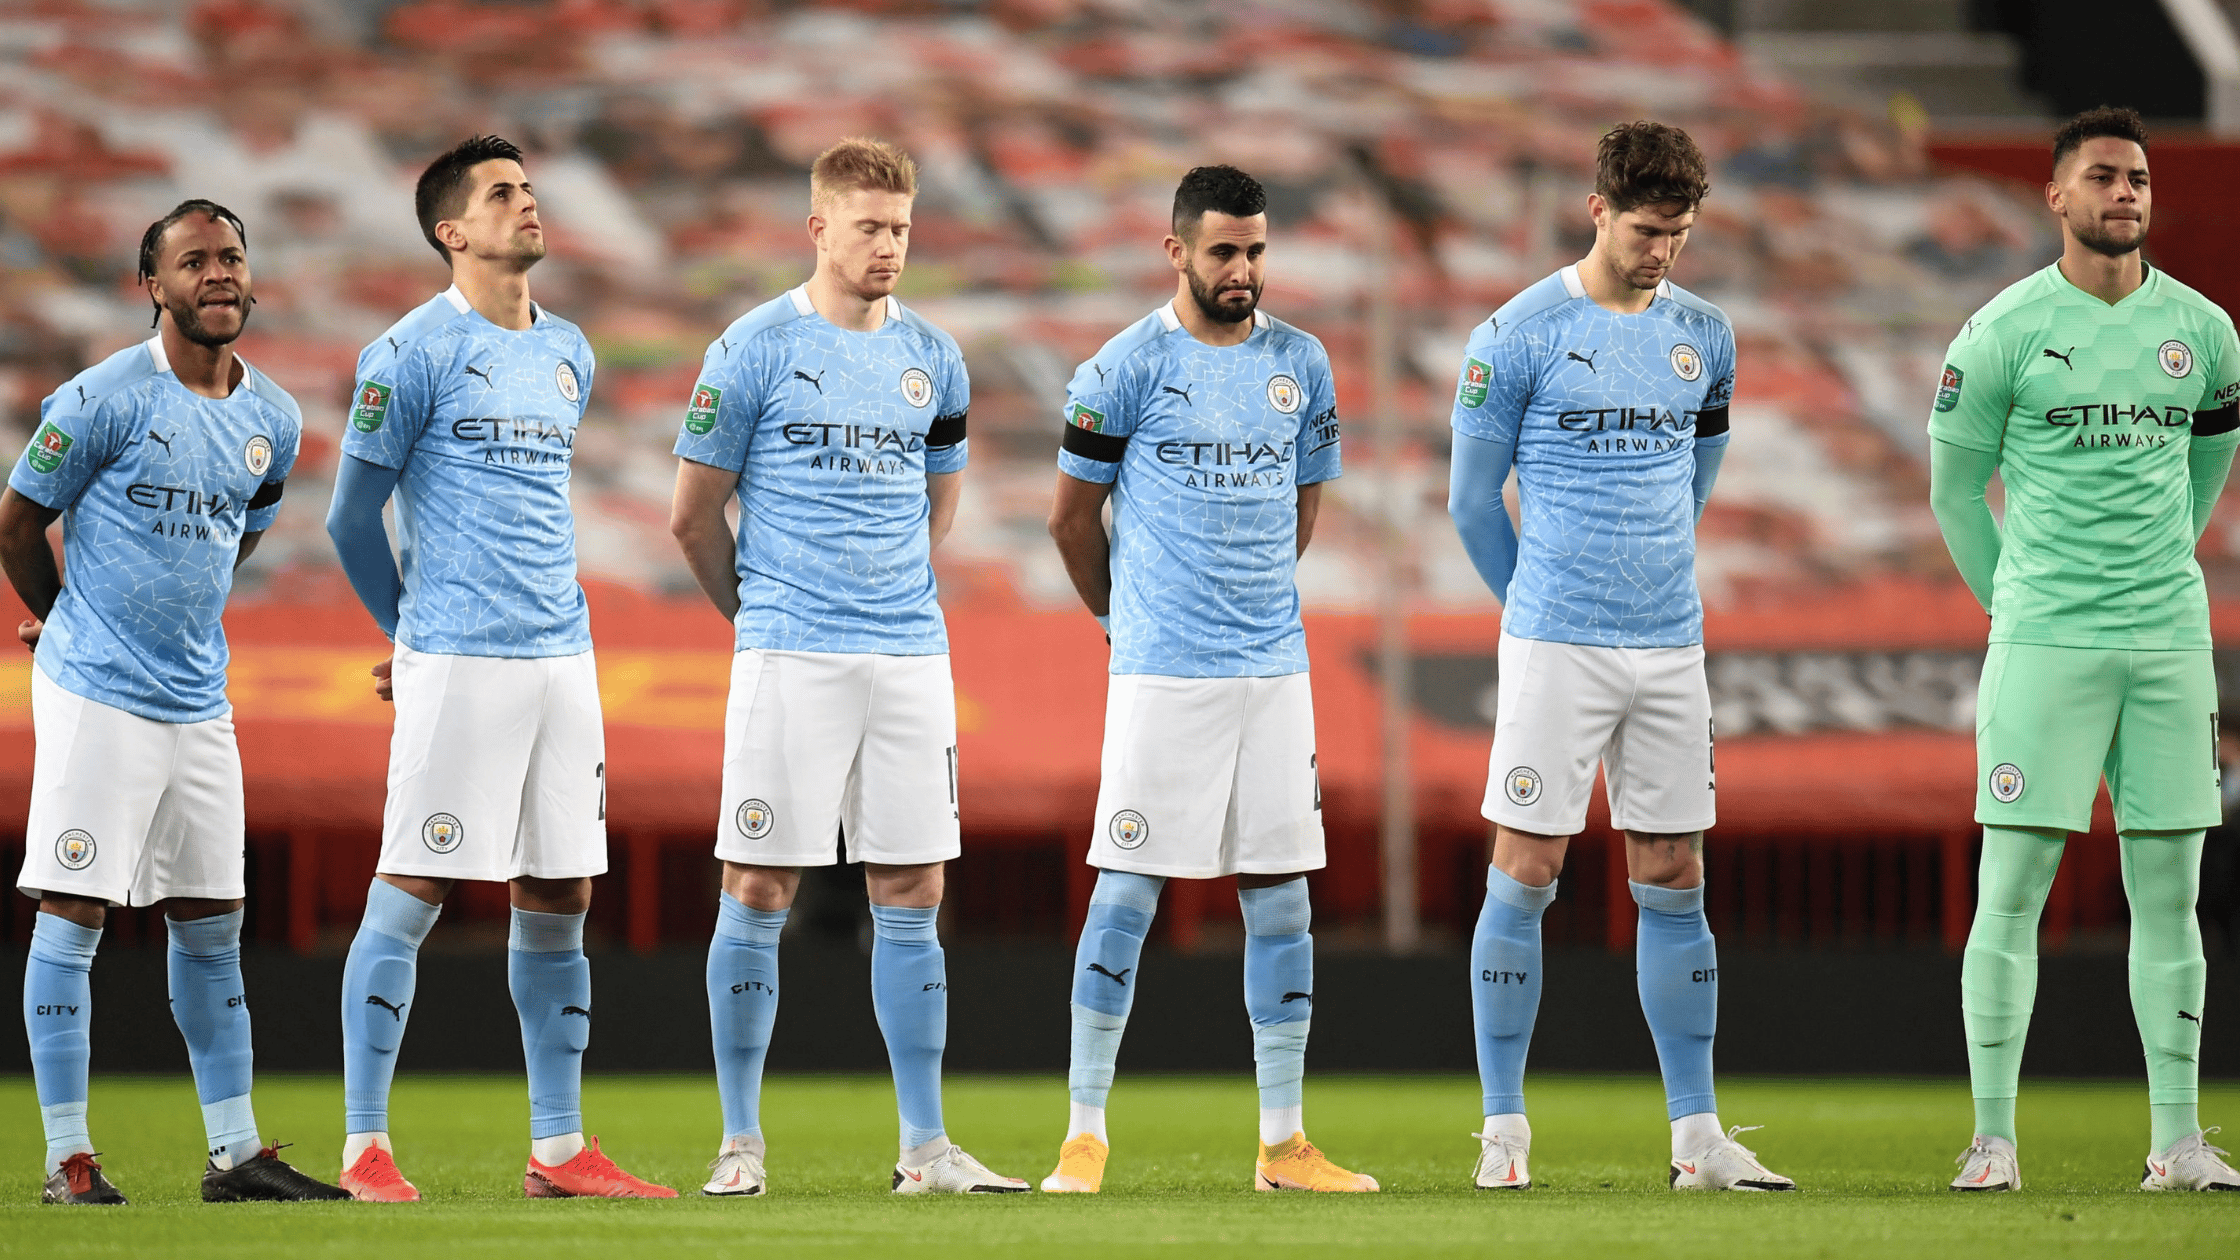 Manchester City 2020/2021 squad